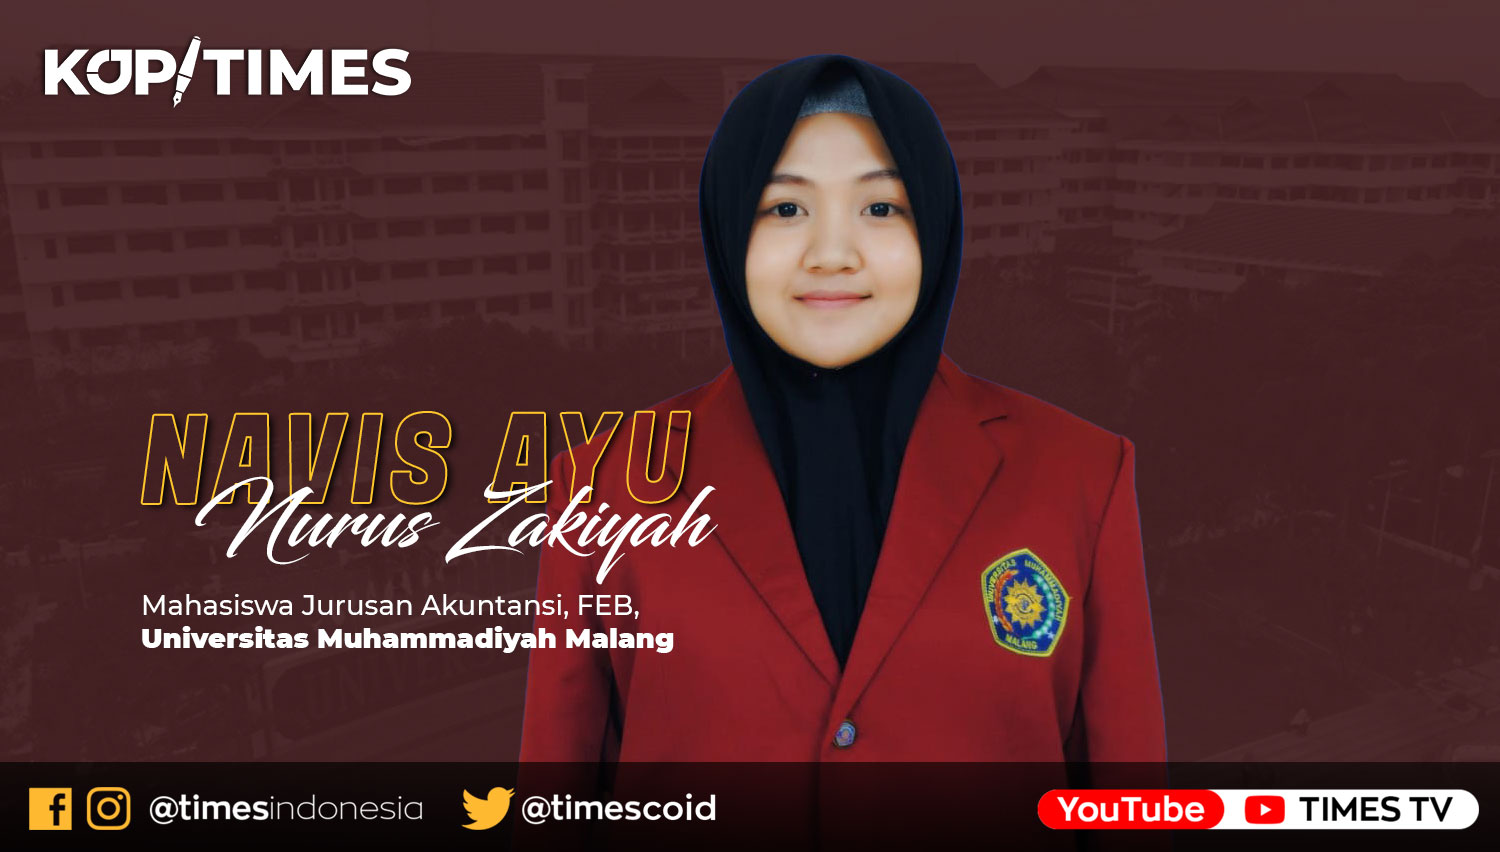 Navis Ayu Nurus Zakiyah, mahasiswa Jurusan Akuntansi, FEB, Universitas Muhammadiyah Malang